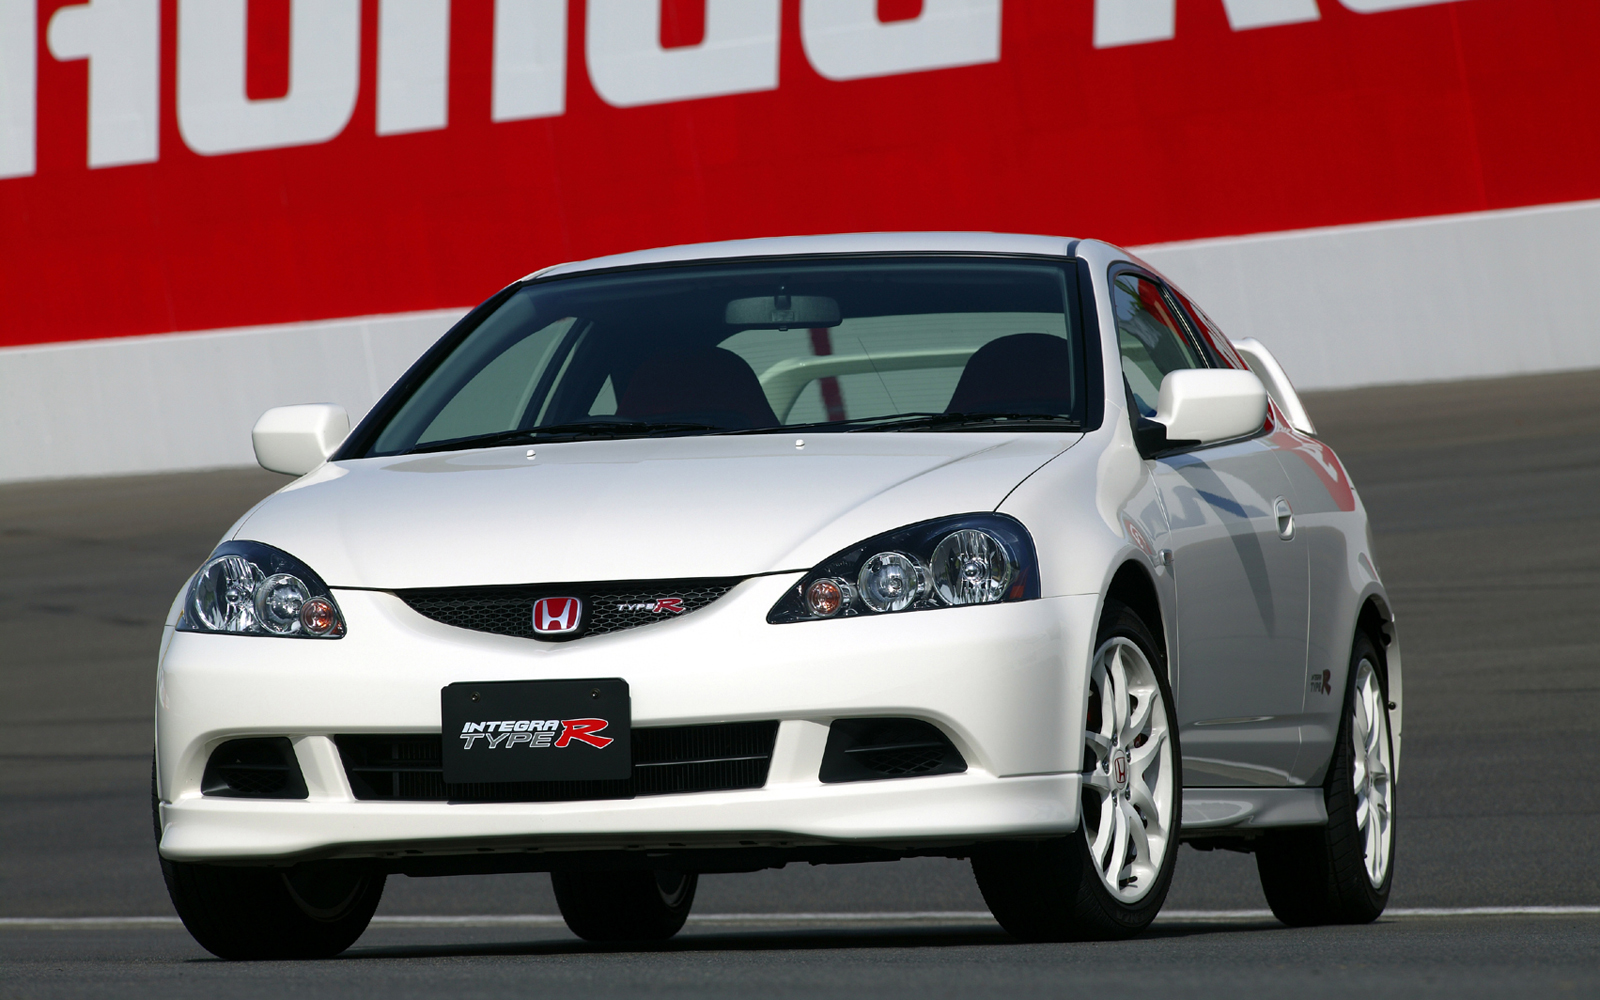 Honda название. Honda Integra Type r dc4. Honda Integra Type r 2004. Honda Integra Type r 4 поколения. Хонда Интегра 2004 тайп р.